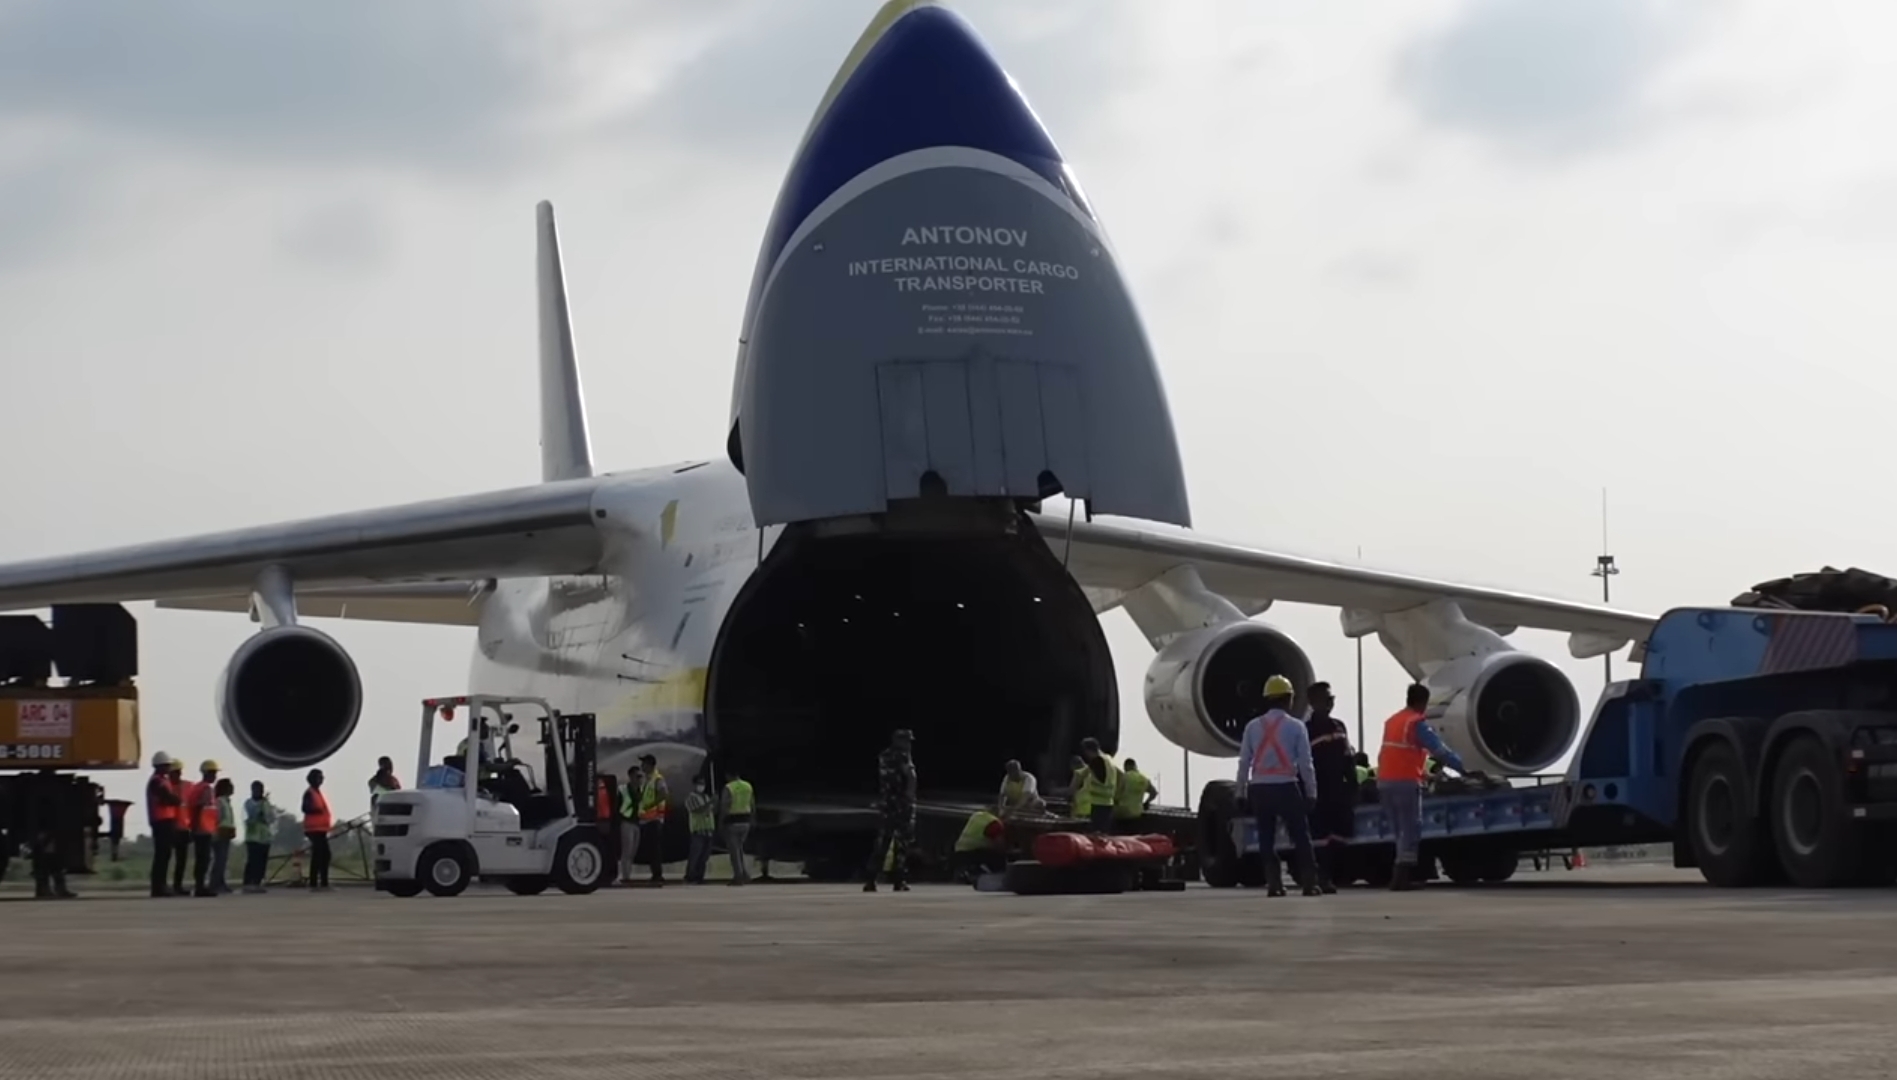 Disewa Chandra Asri, Pesawat Antonov Mendarat di Bandara Kertajati Majalengka, Bawa Mesin Ini